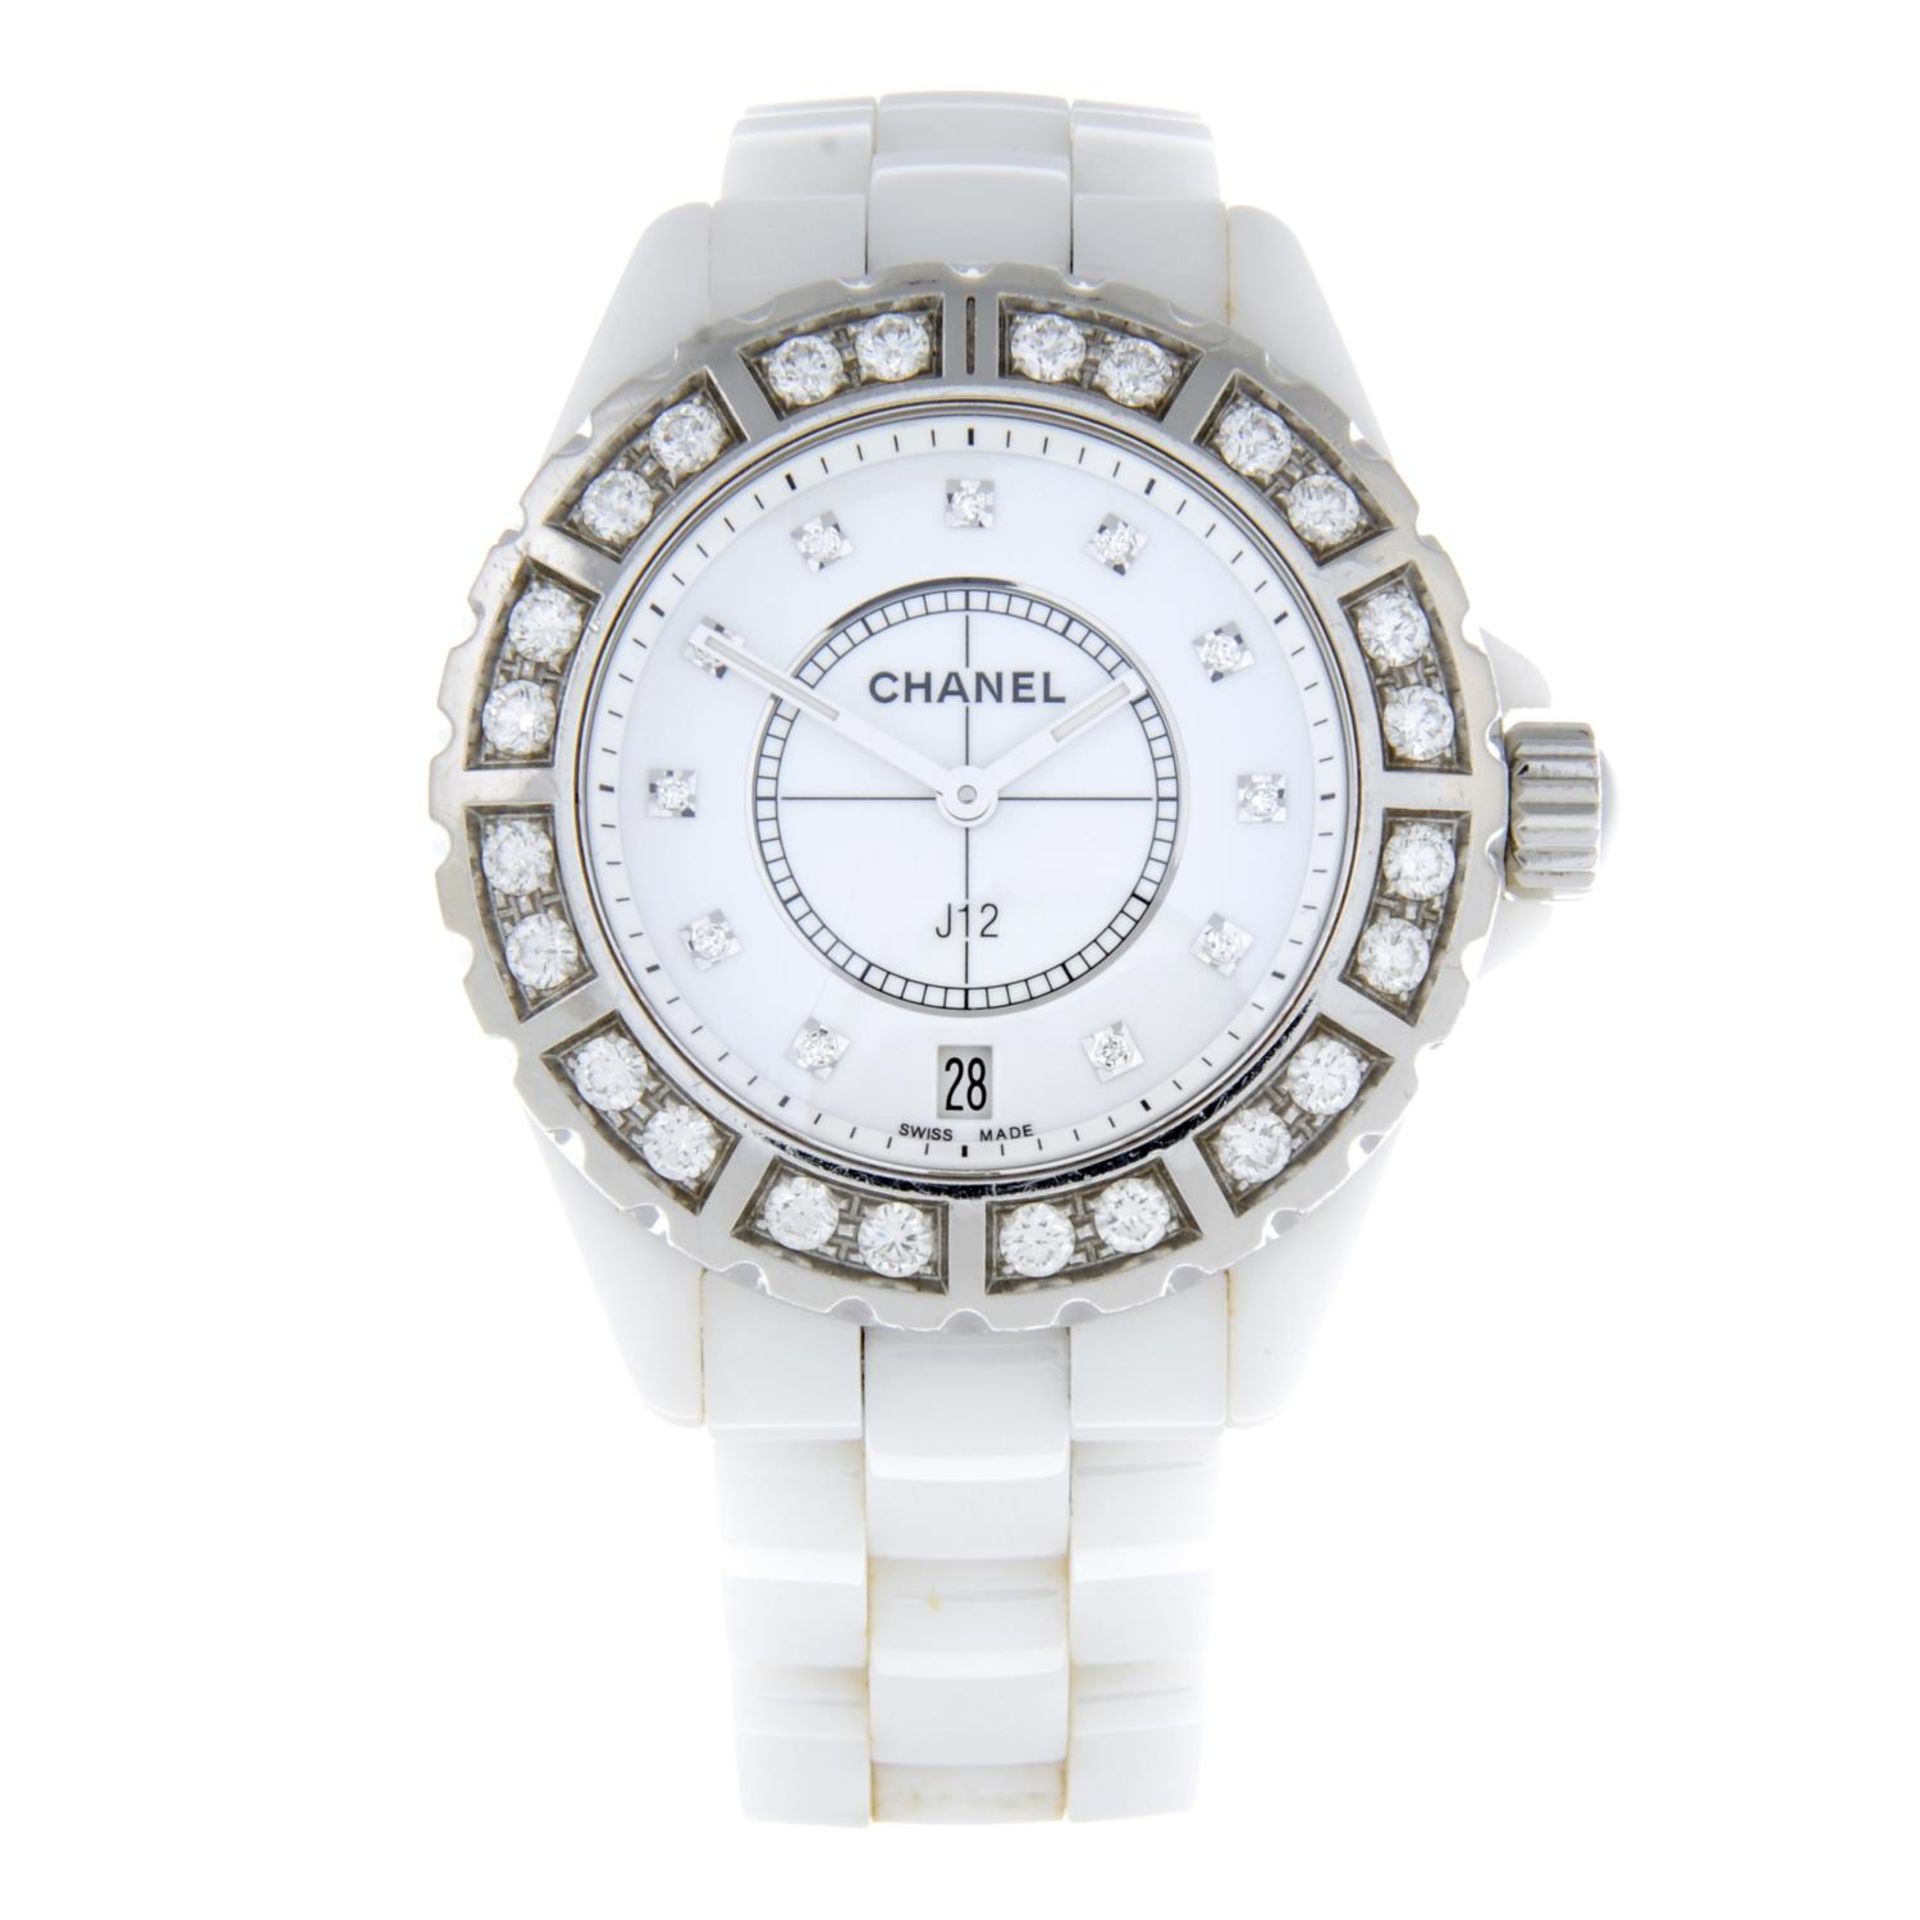 CHANEL - a mid-size J12 bracelet watch.